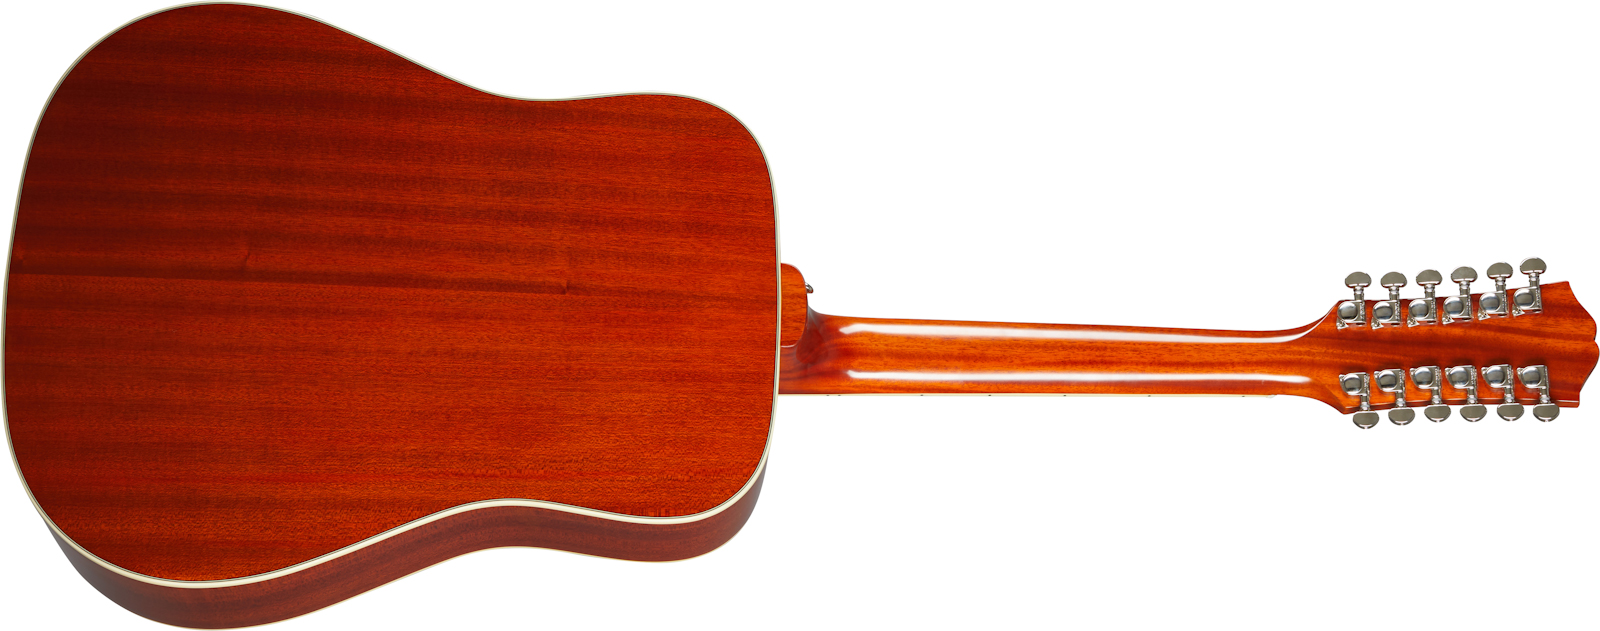 Epiphone Hummingbird 12-string Inspired By Gibson Dreadnought 12c Epicea Acajou Lau - Aged Cherry Sunburst - Elektroakustische Gitarre - Variation 1